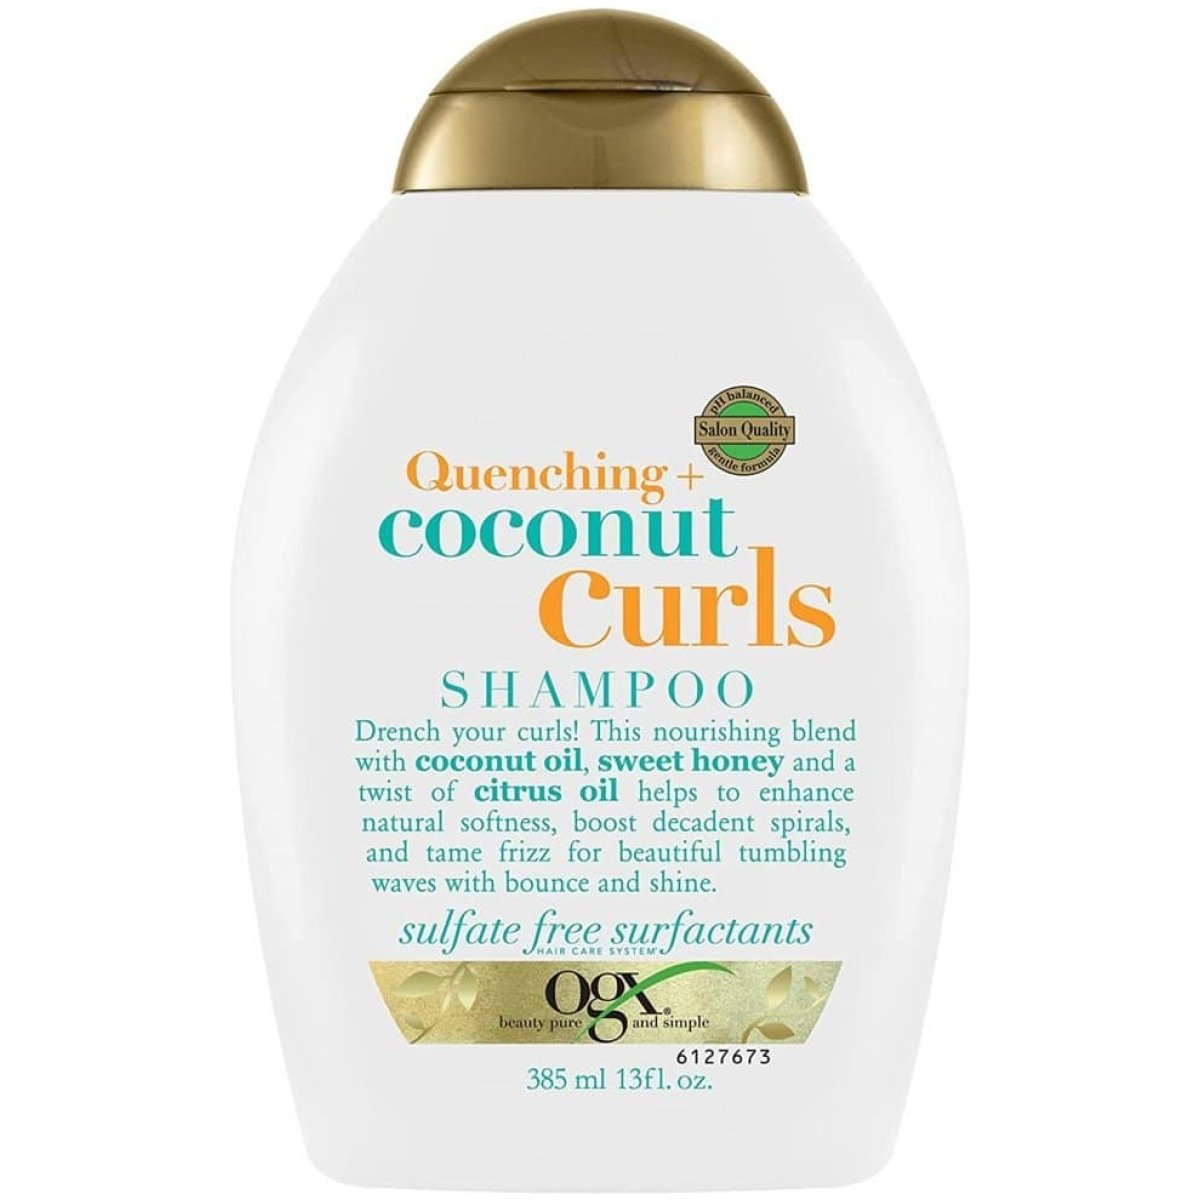 Moisturizing shampoo with Coconut Oil for frizzy hair.